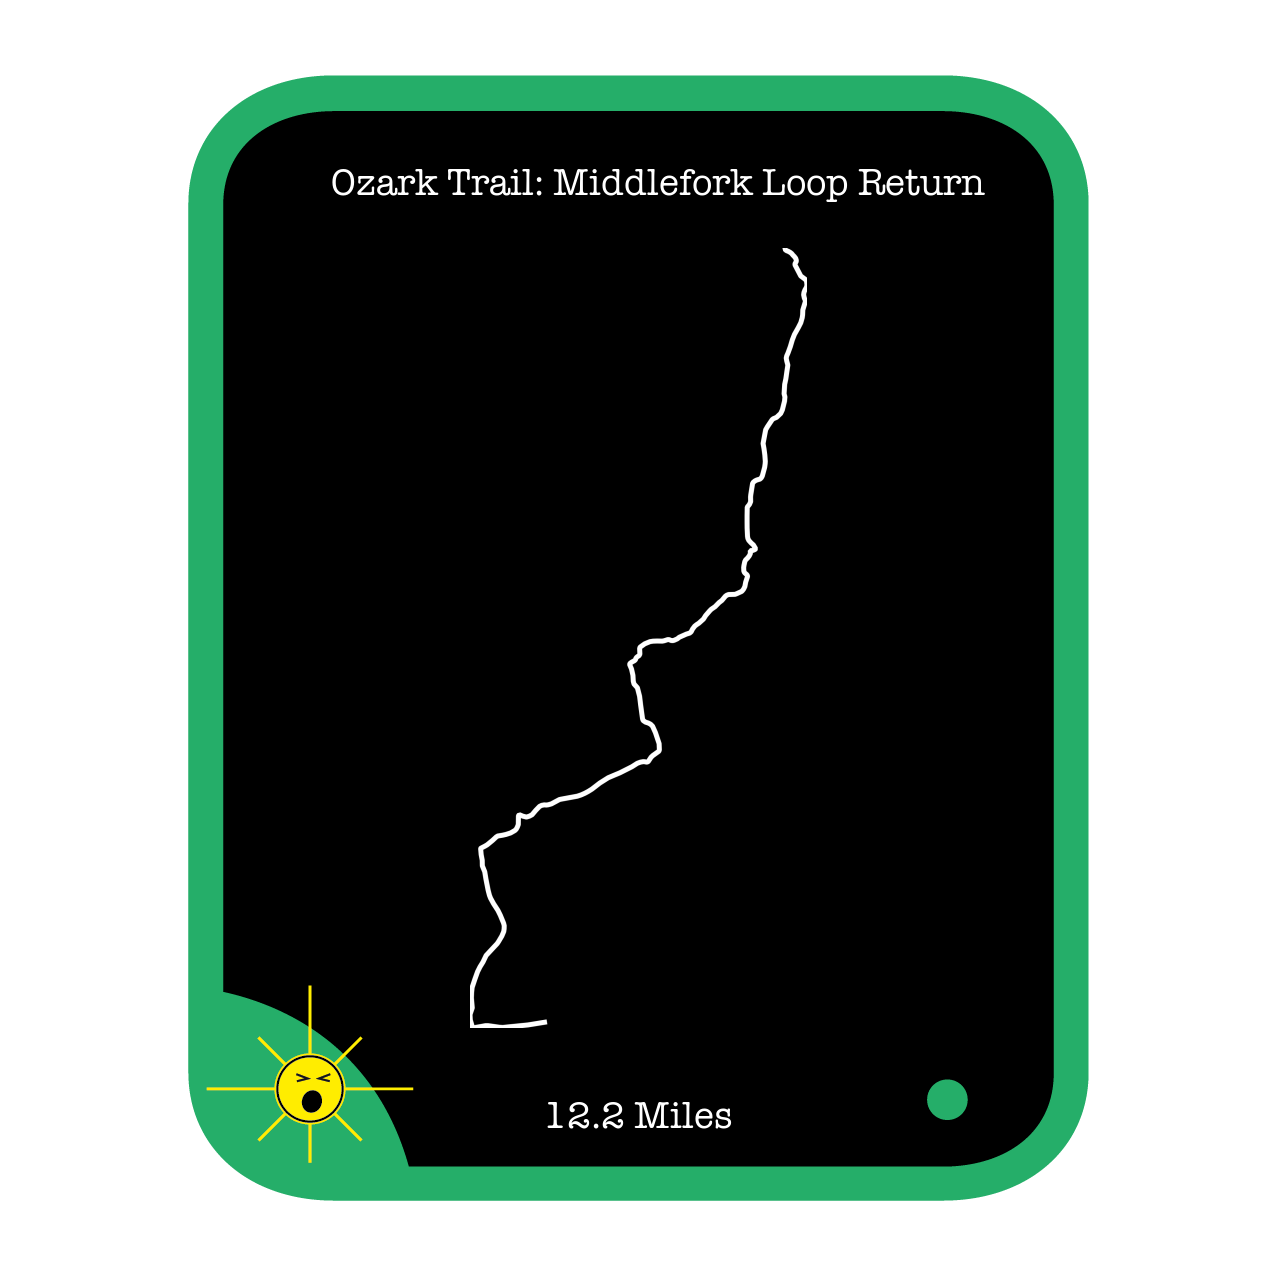 Ozark Trail: Middlefork Loop Return